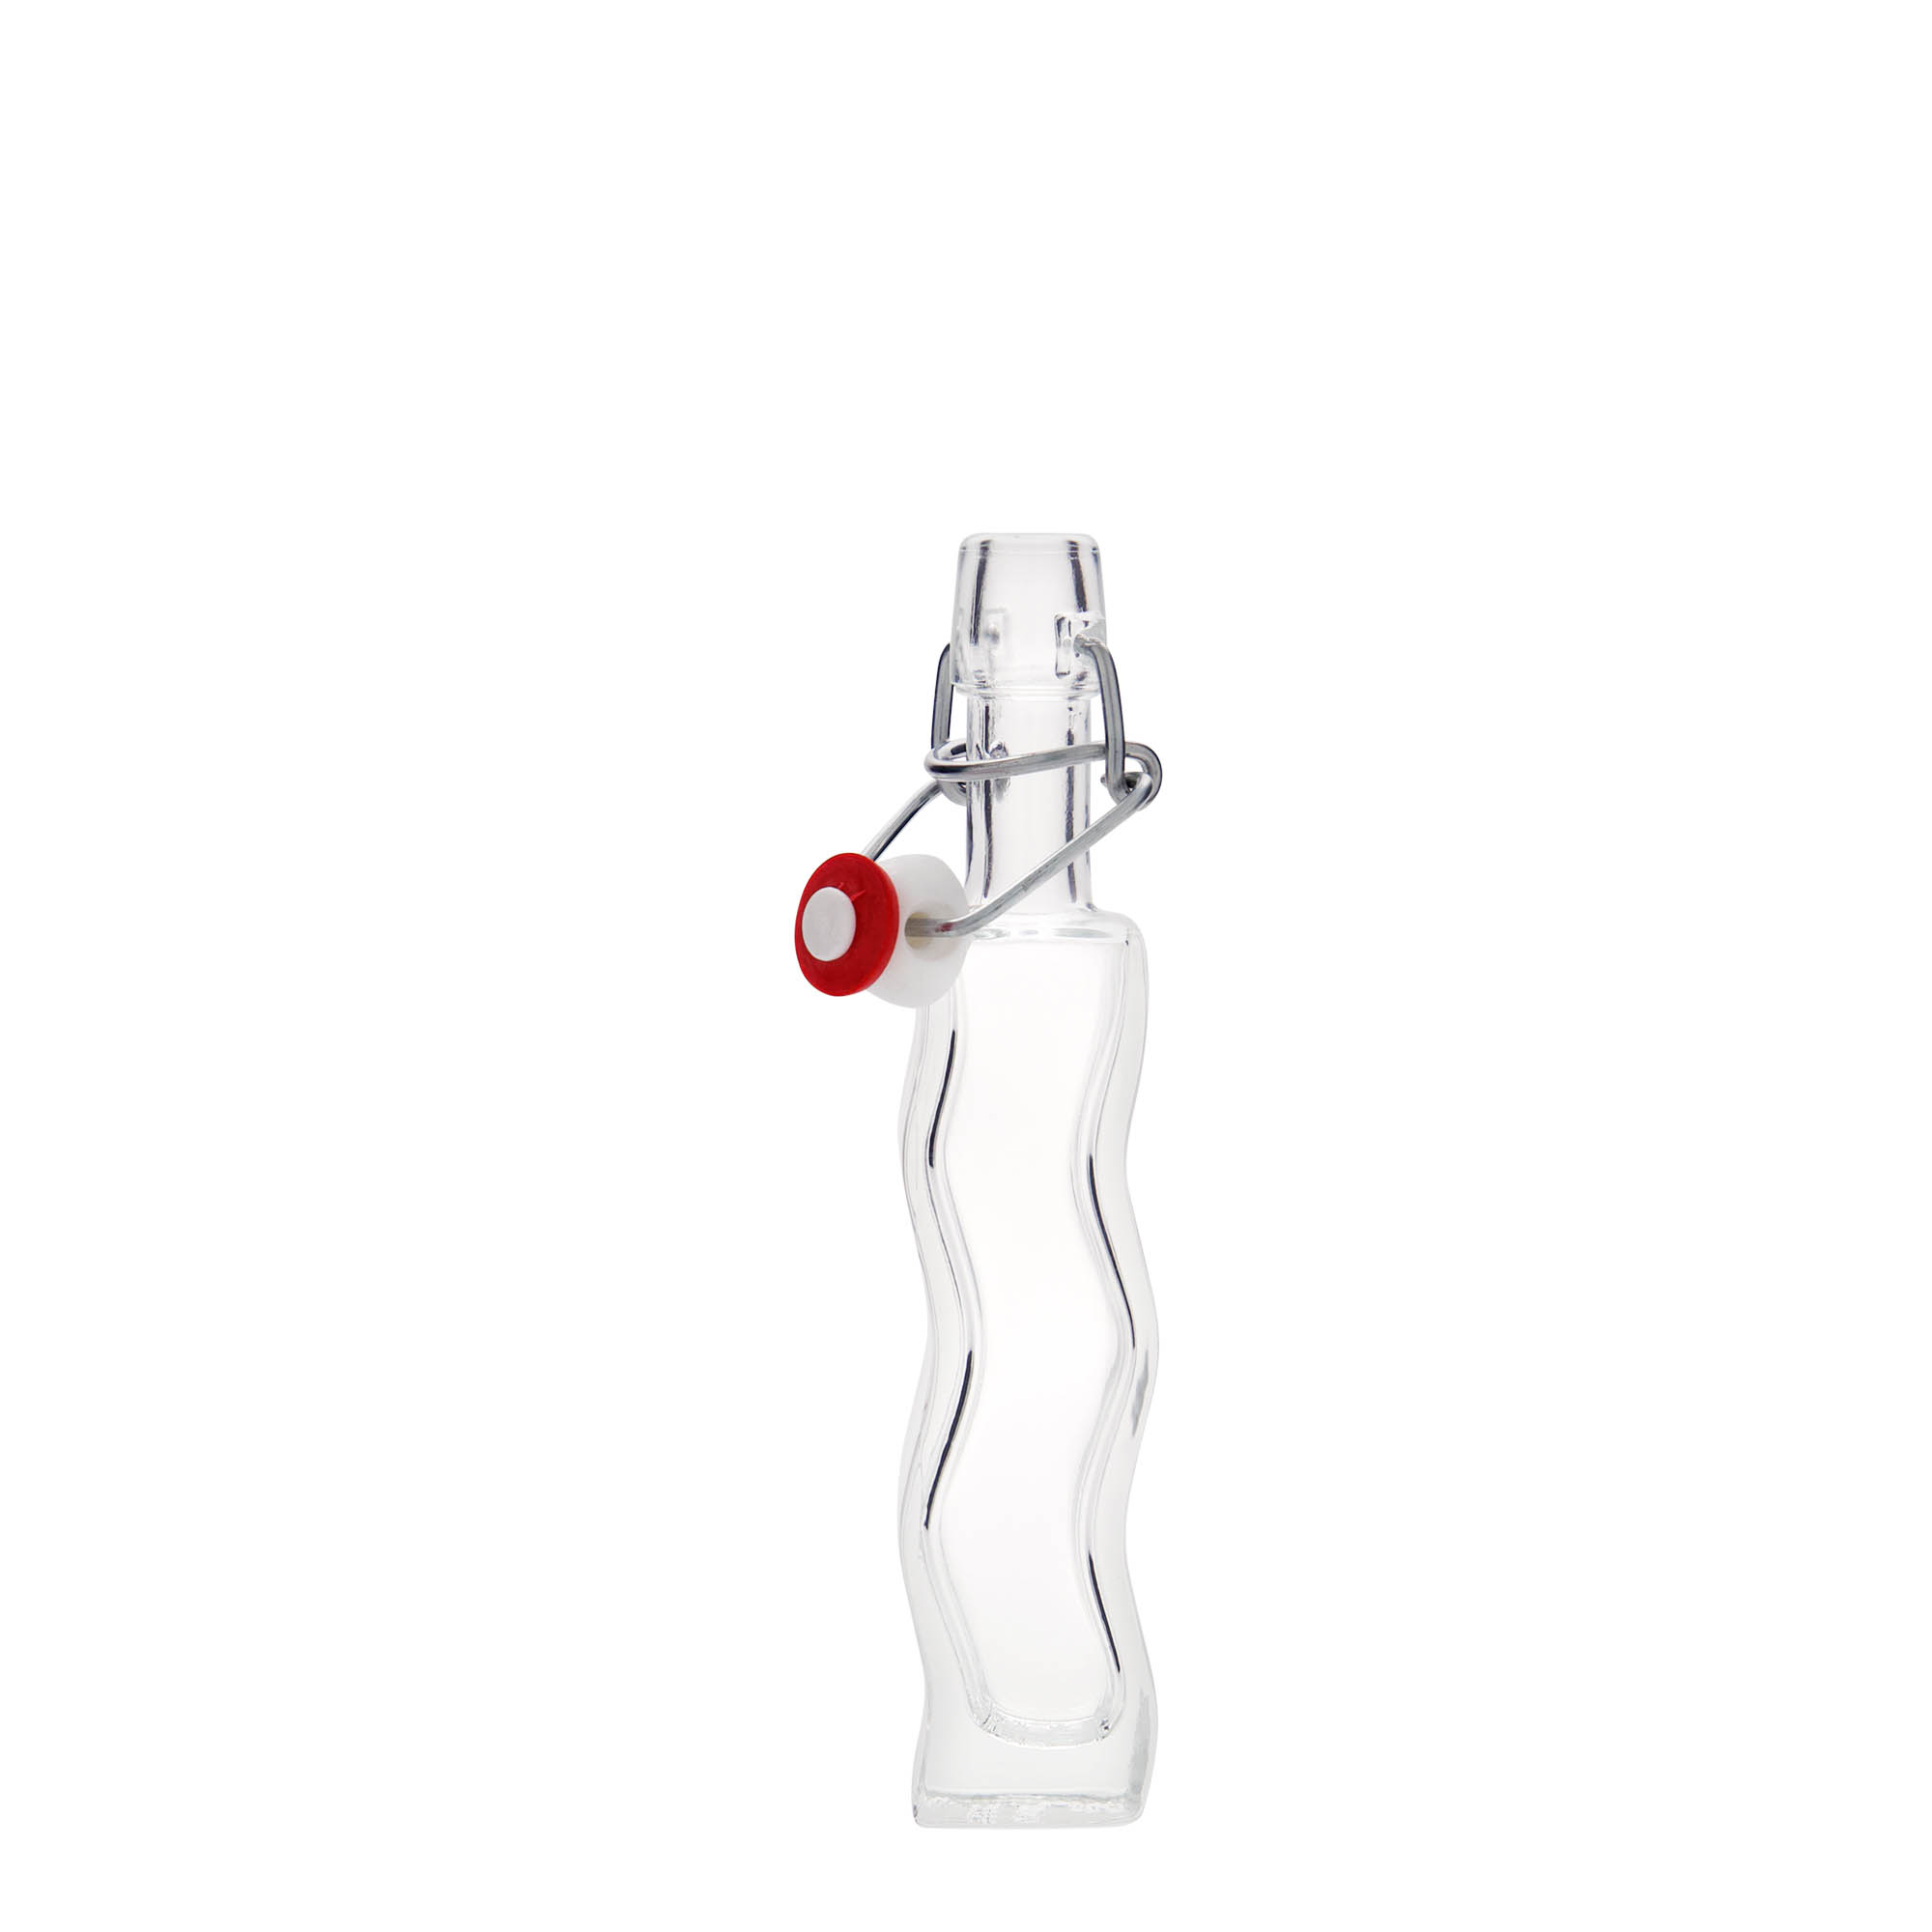 Botella de vidrio 'Onda' de 40 ml, cuadrada, boca: tapón mecánico